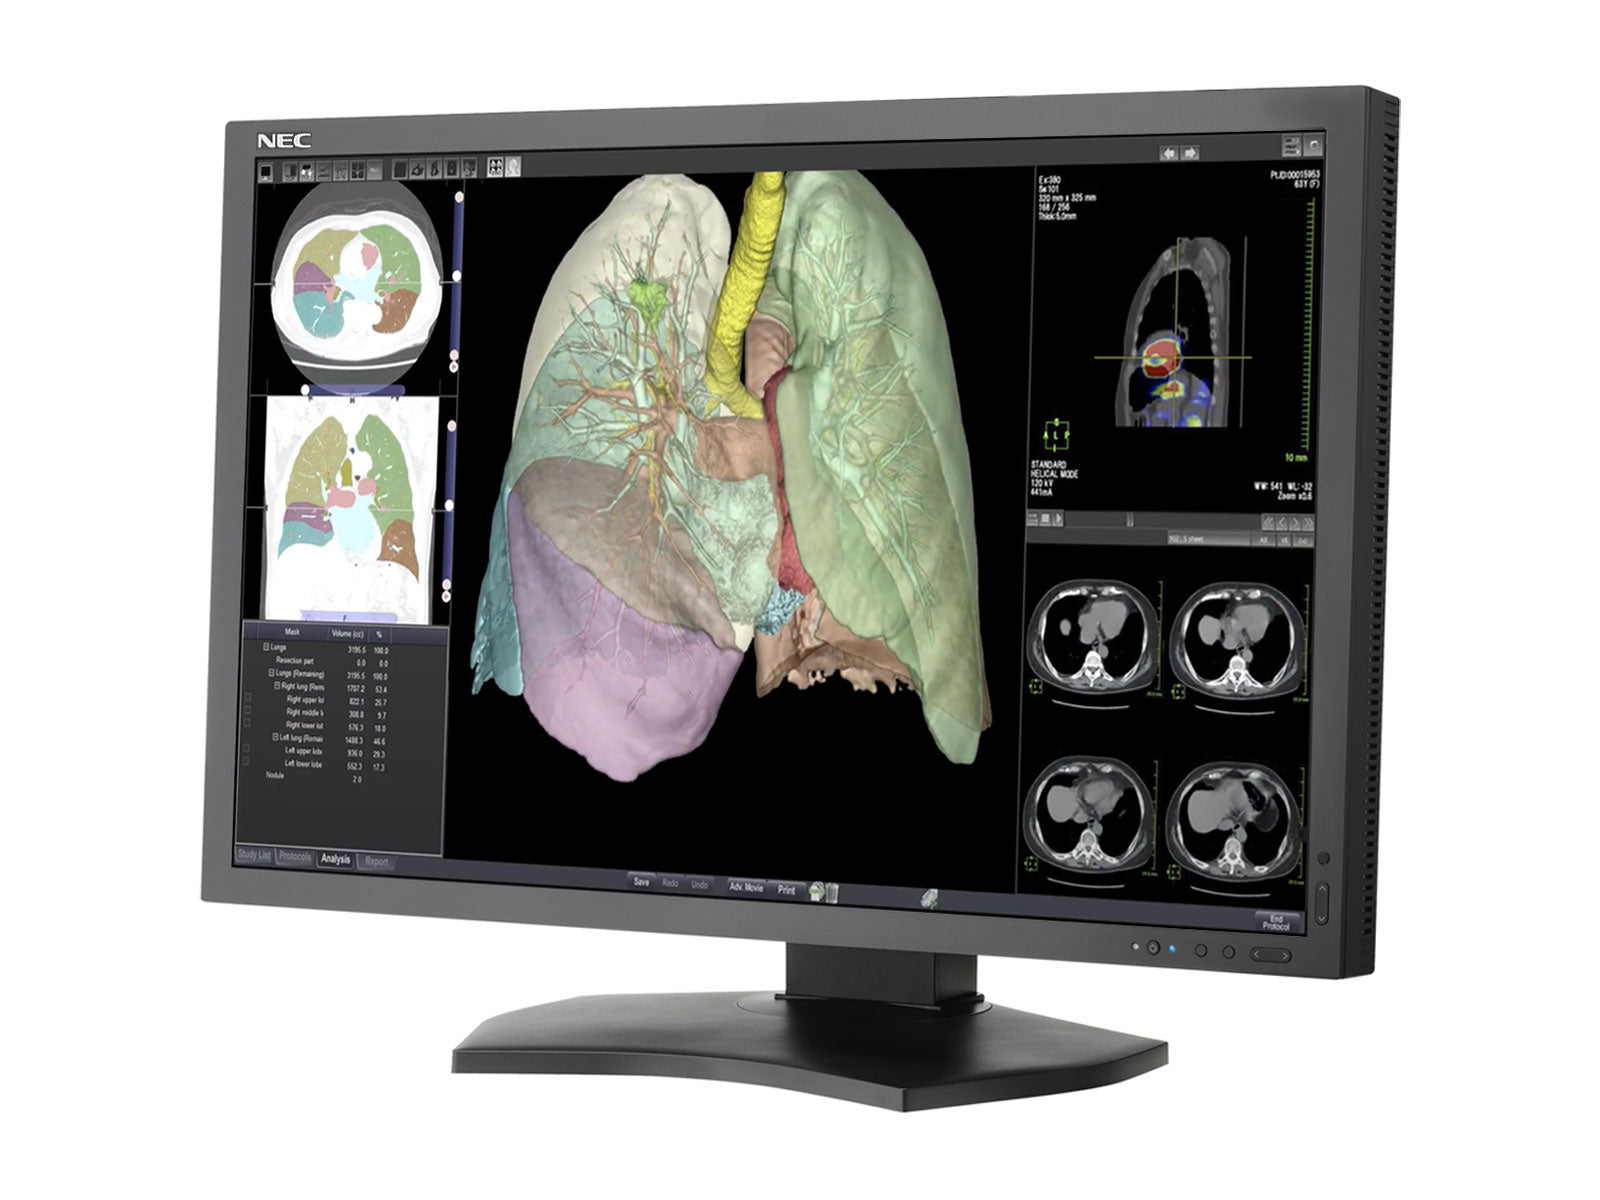 NEC MultiSync MD301C4 4MP 30" General Radiology PACS Display (MD301C4) Monitors.com 